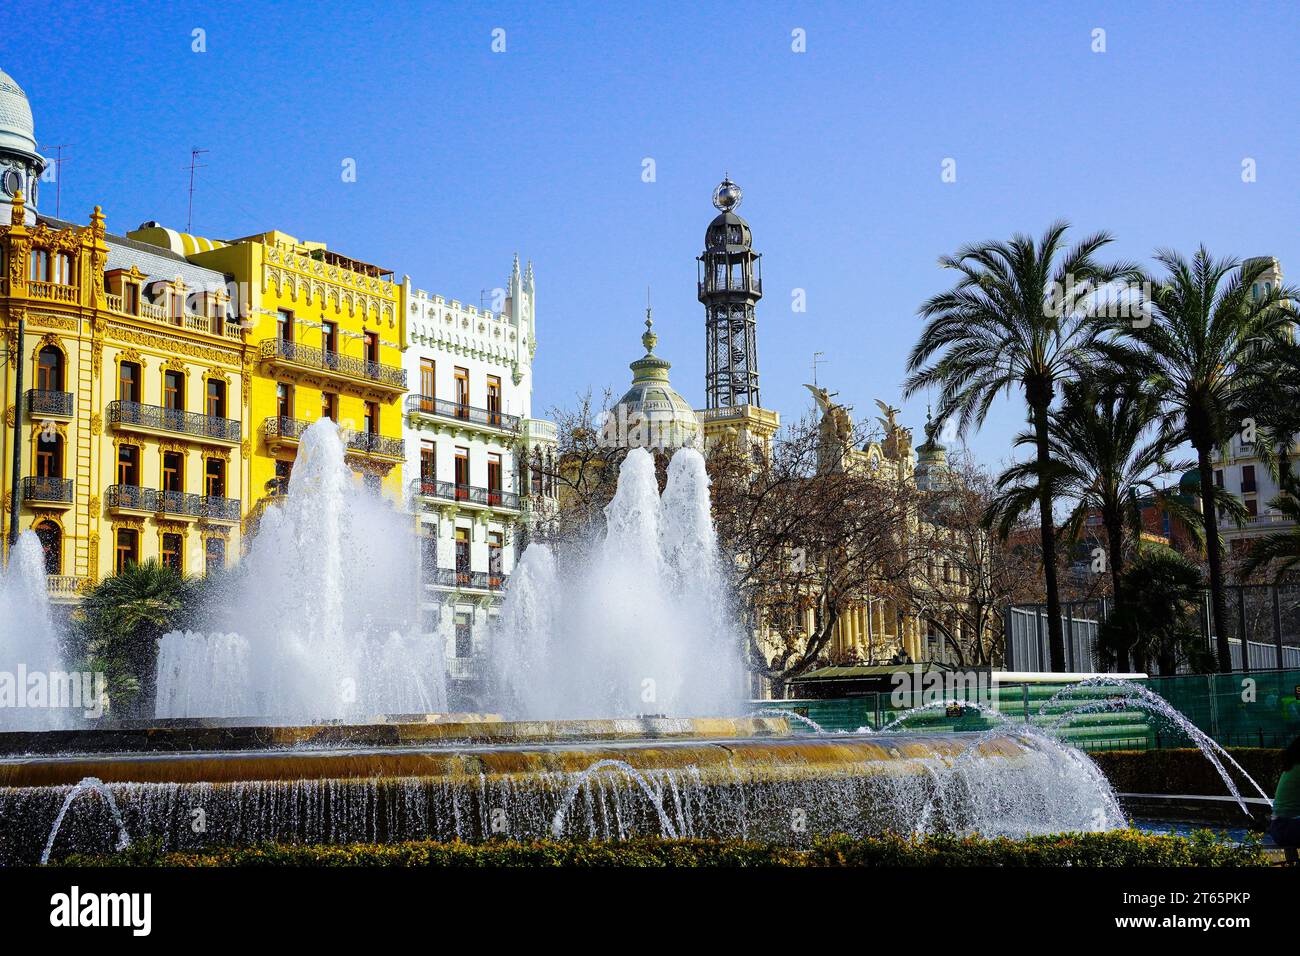 Fountain at Valencia's Town Hall Square in Spain,  Plaza del Ayuntamiento Stock Photo